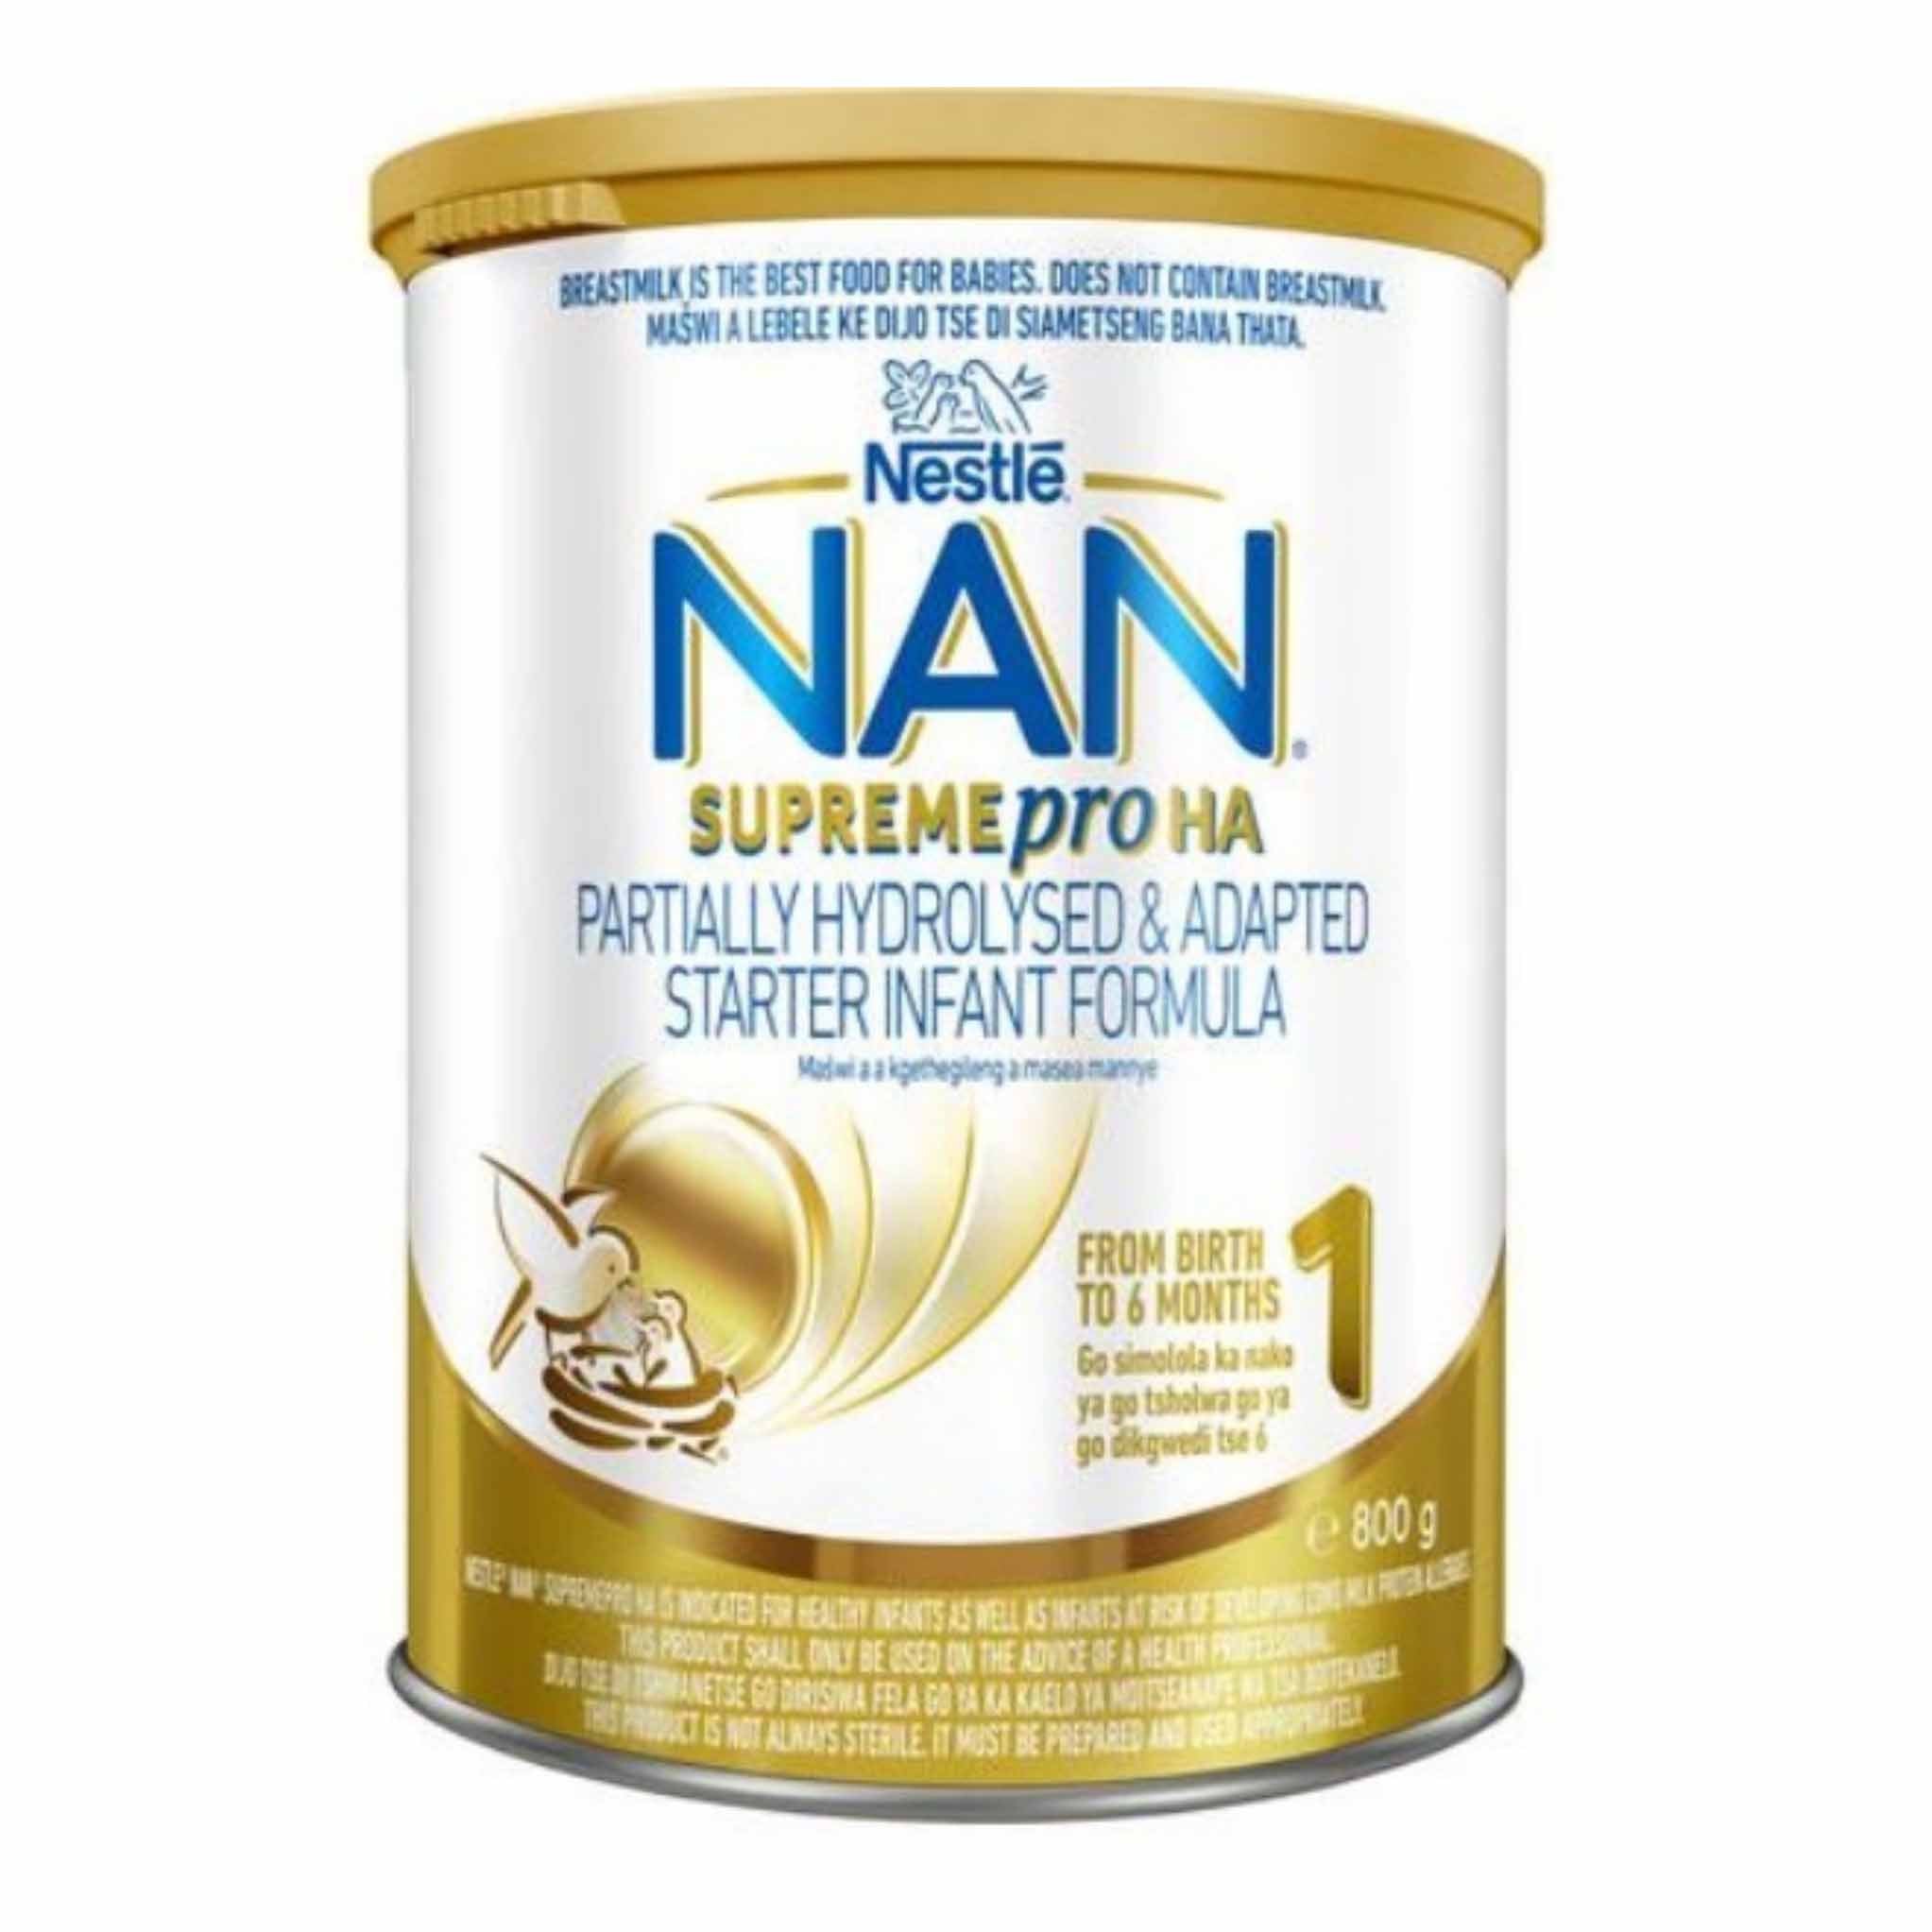 NAN Optipro 1 Nestle Baby Milk Powder From The Birth 800gr